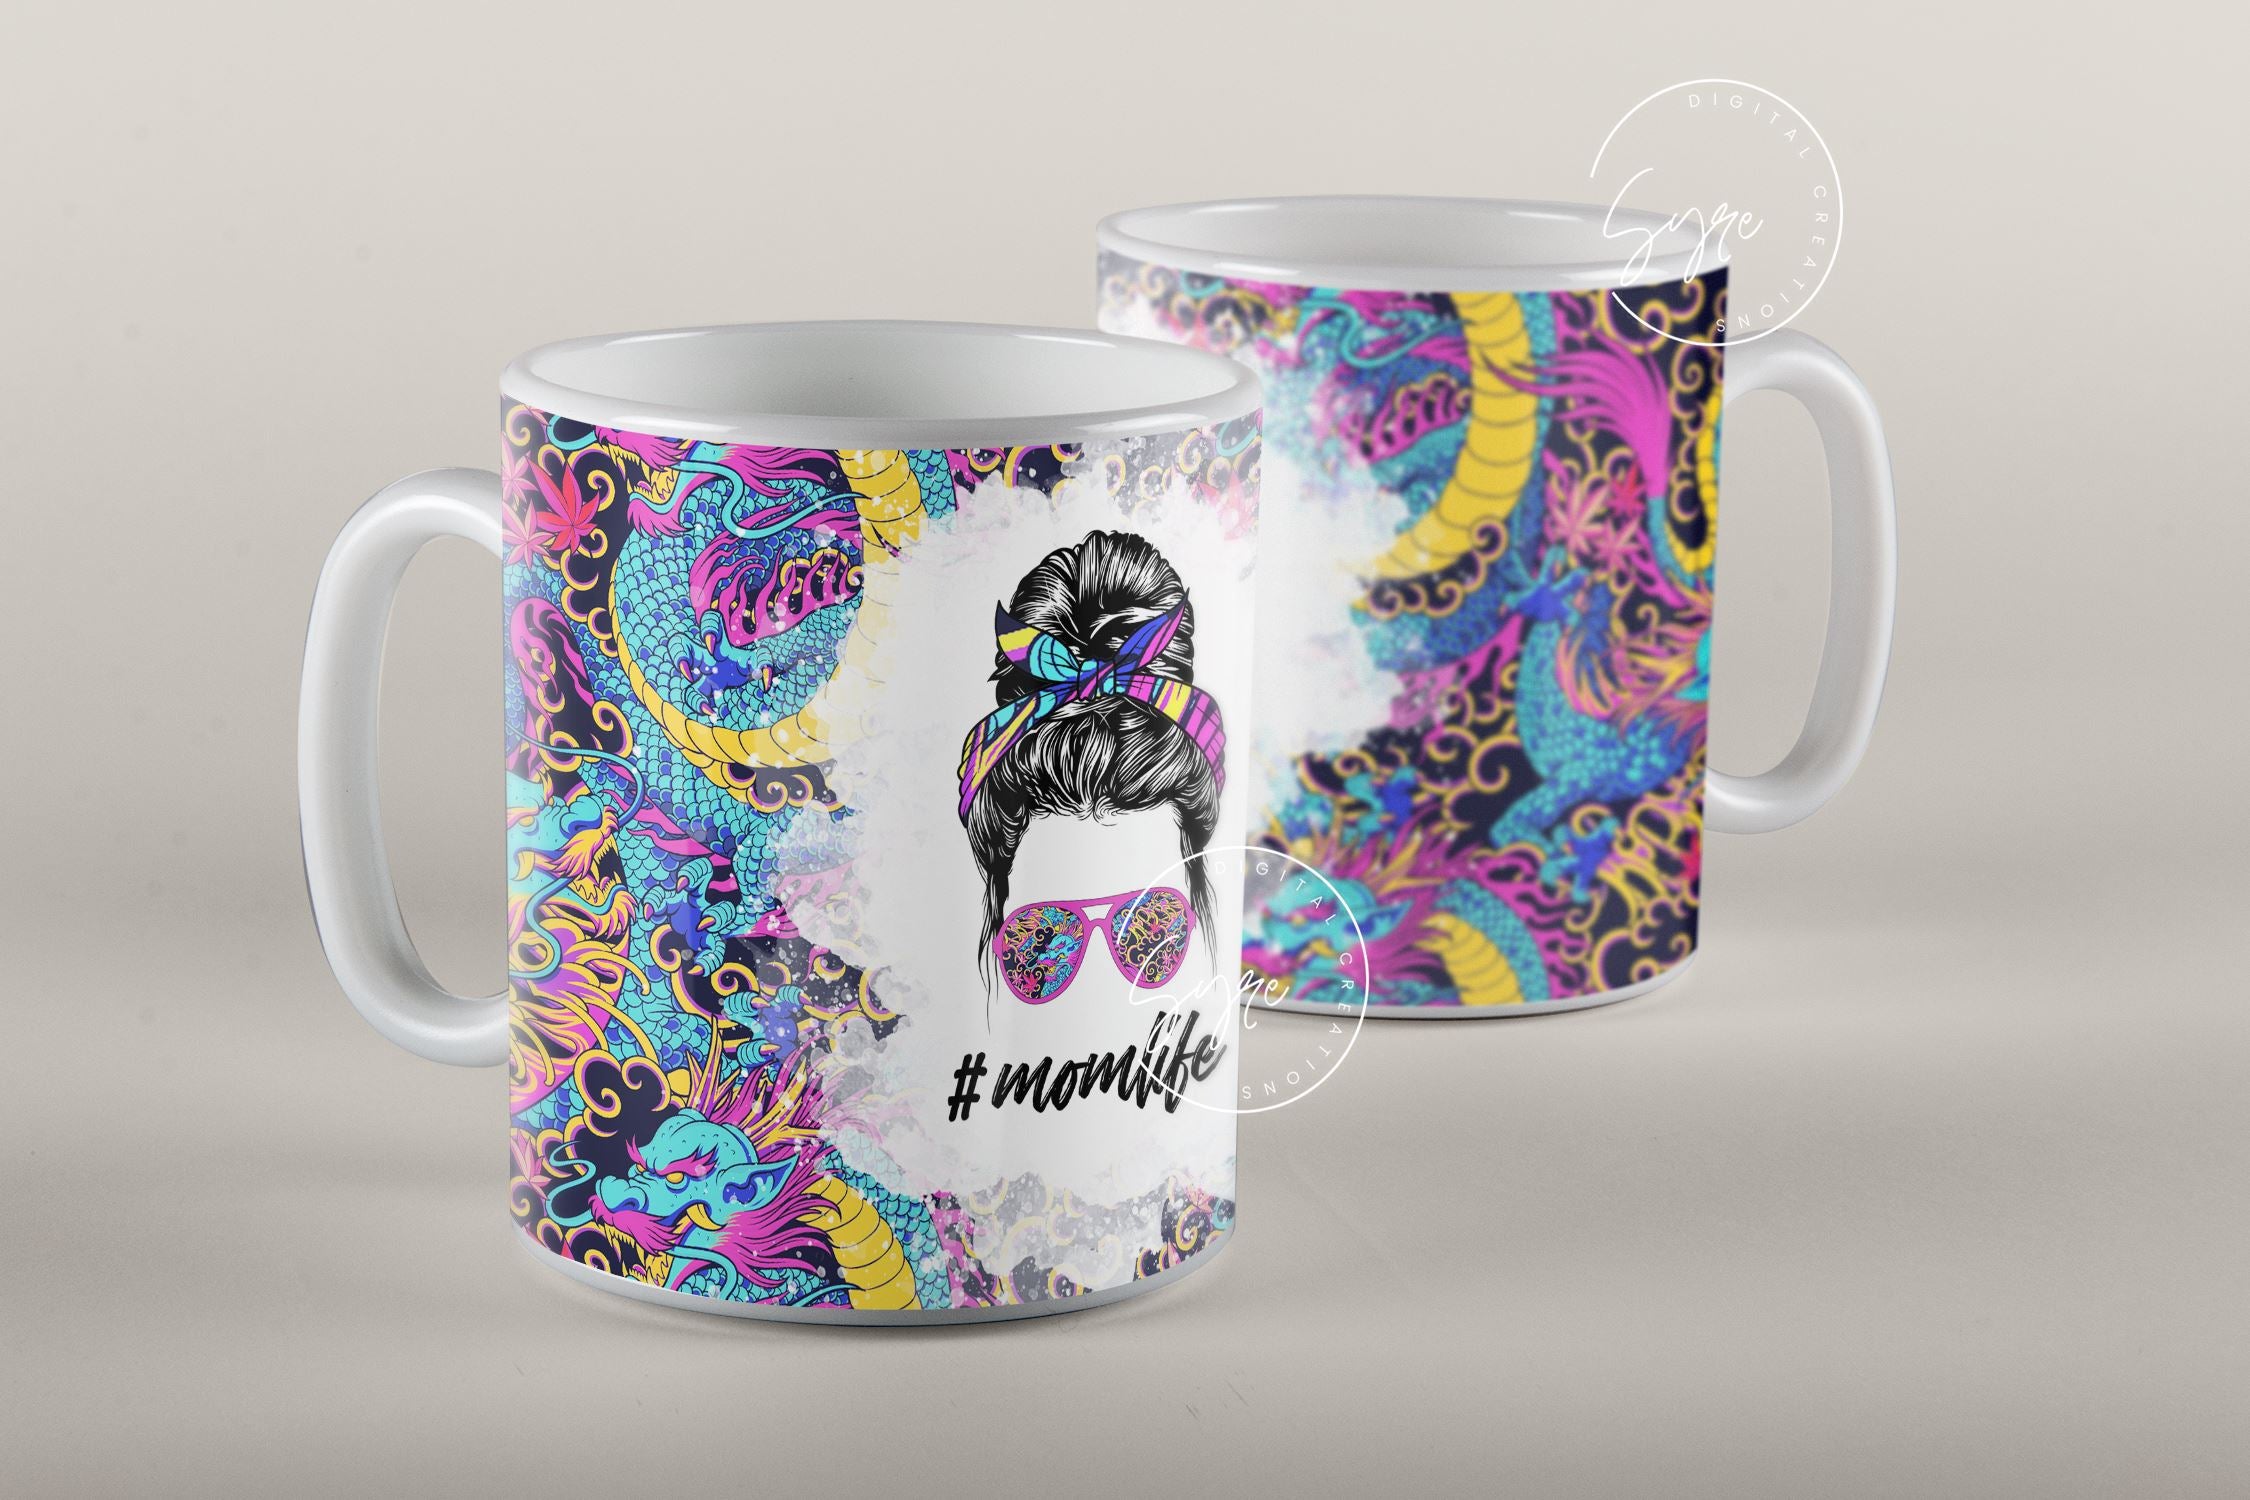 15oz Cricut Mug Template Digital Download 15oz Mug Full Wrap